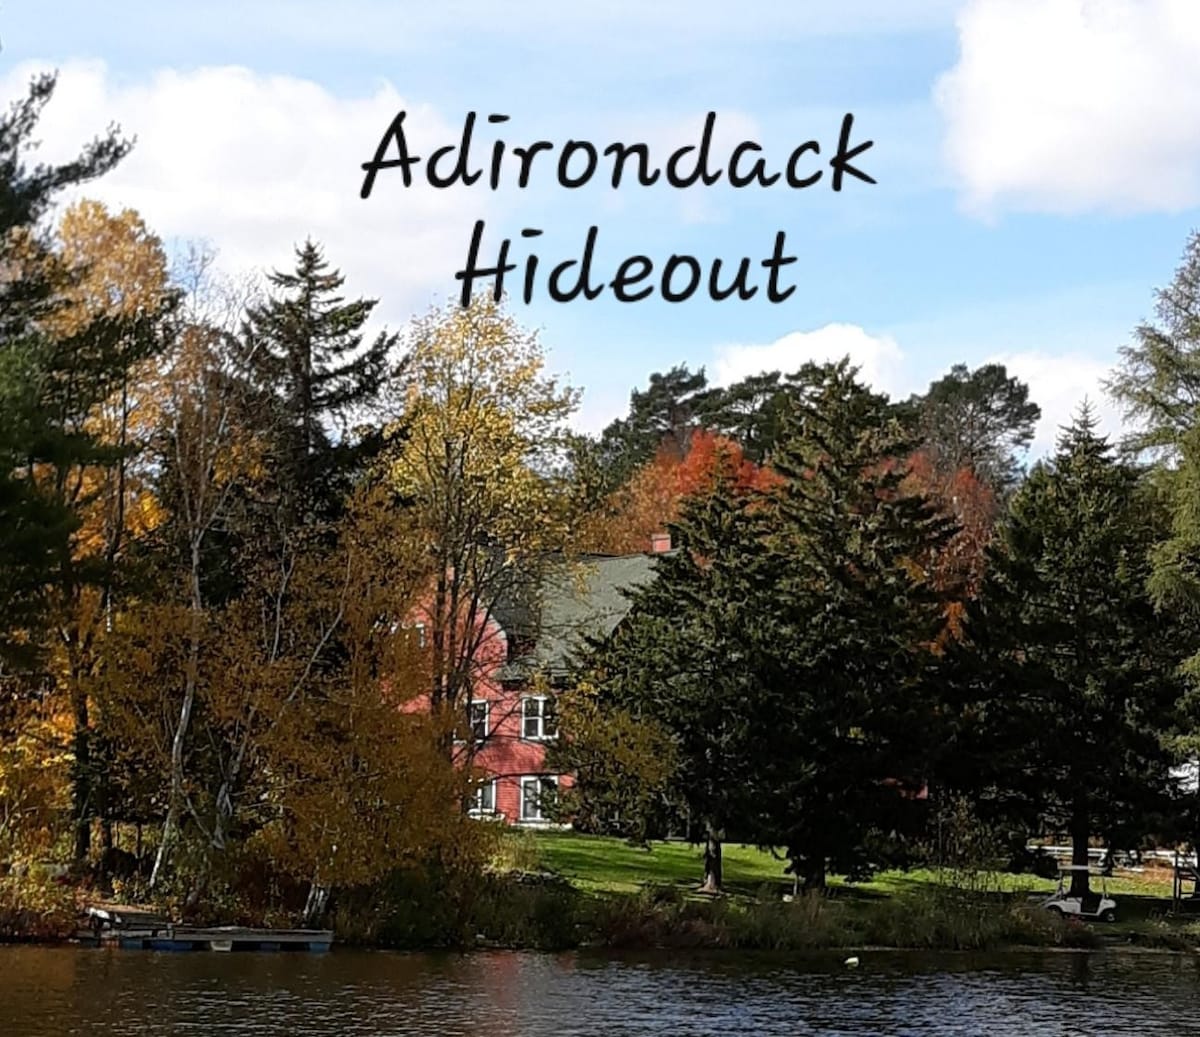 Adirondack Hideout on Chateaugay Lake